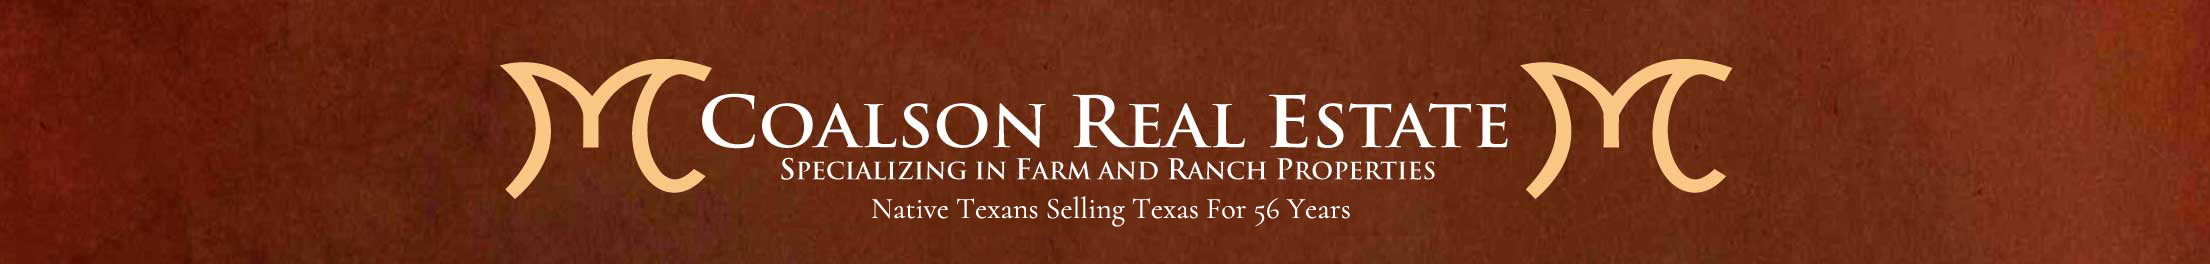 Texas Real Estate Brokers